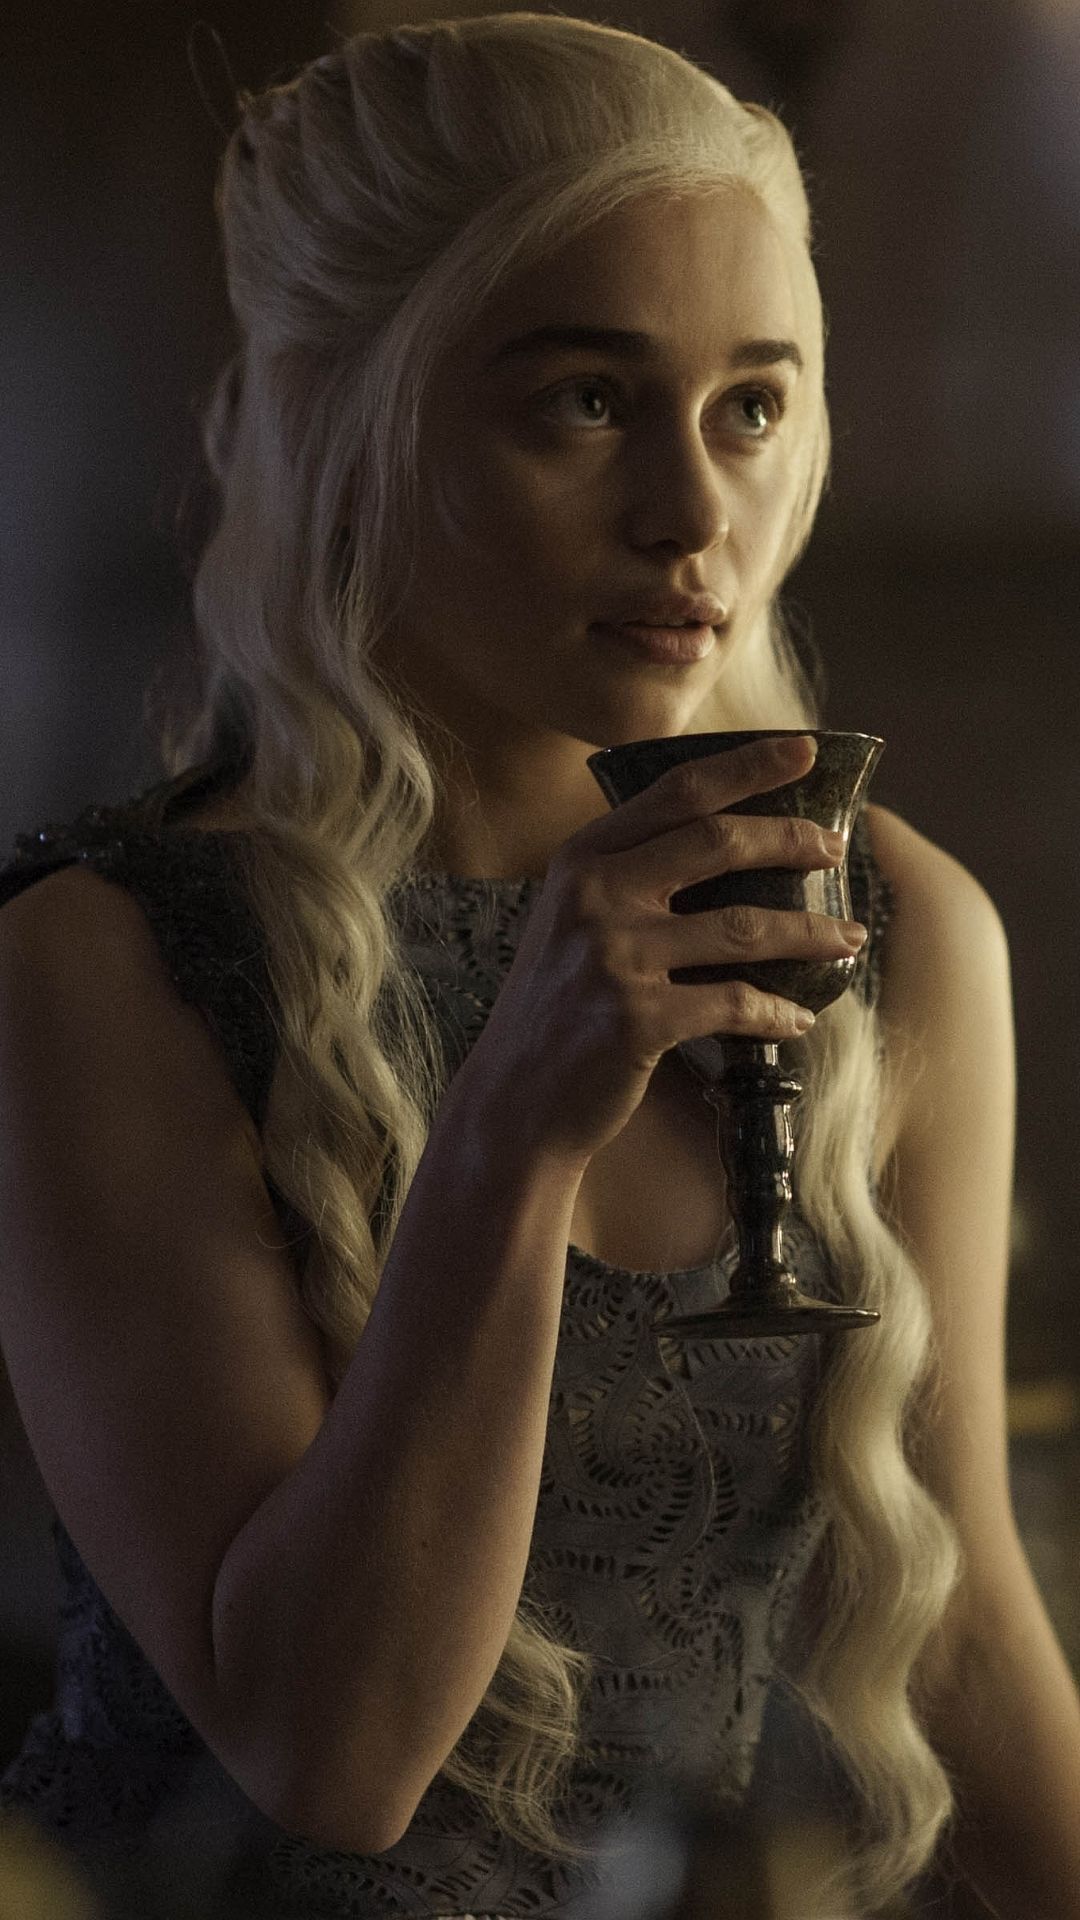 Daenerys Targaryen Apple IPhone 6 (750x1334) Wallpaper. Daenerys Targaryen Wallpaper, Emilia Clarke, Game Of Throne Daenerys